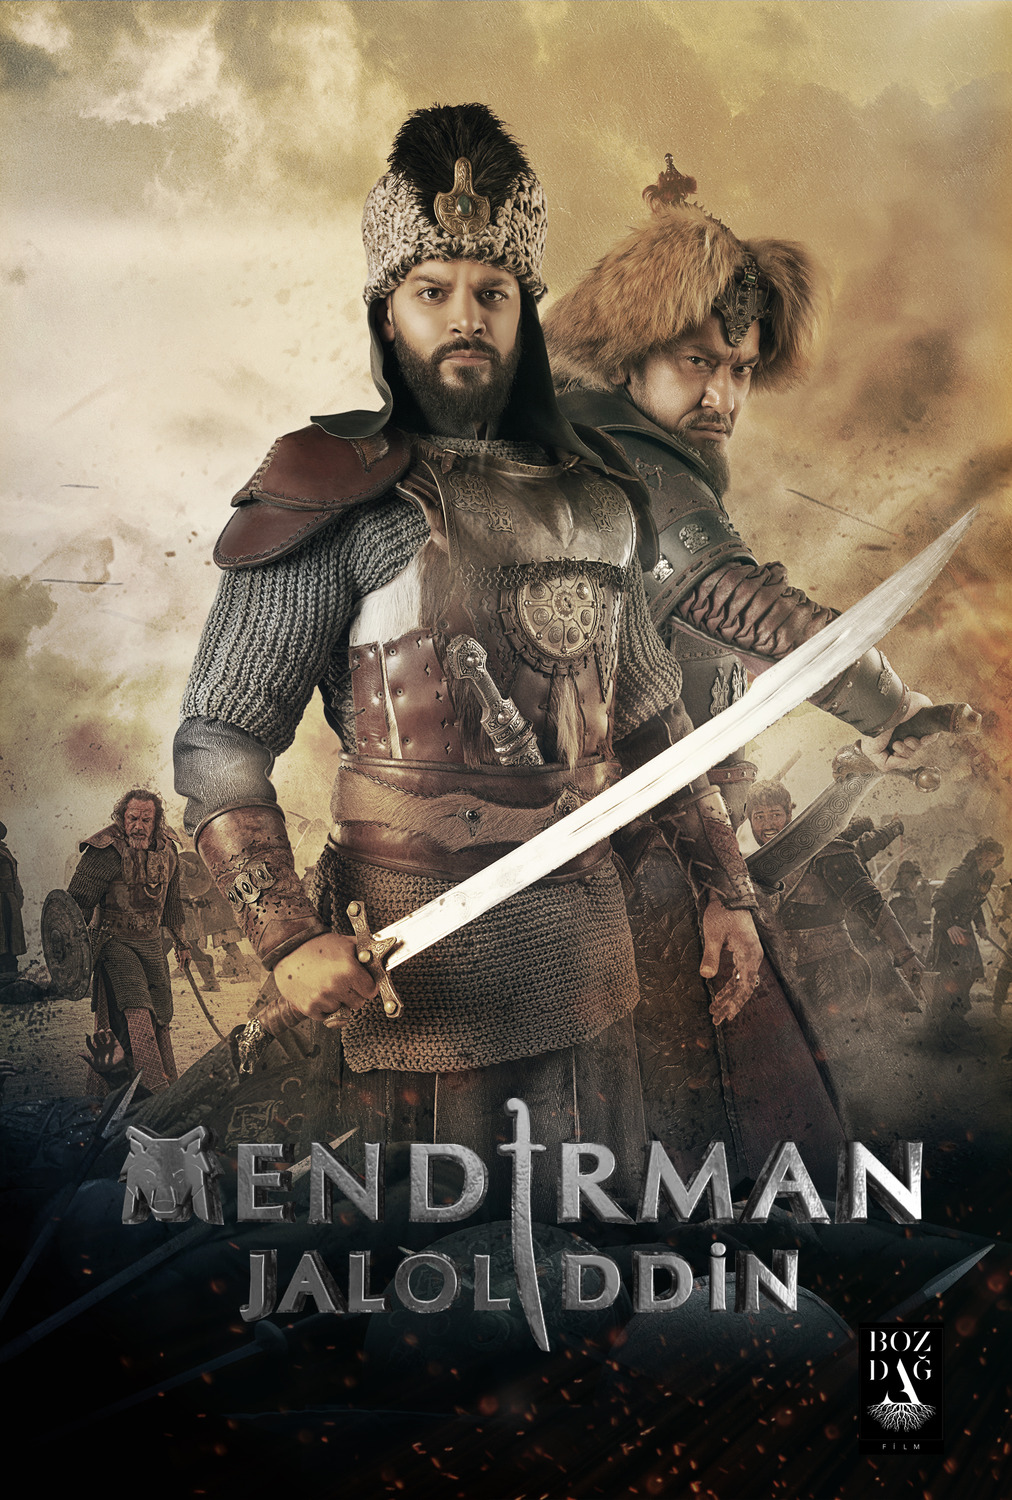 Extra Large TV Poster Image for Mendirman Jaloliddin (#5 of 7)